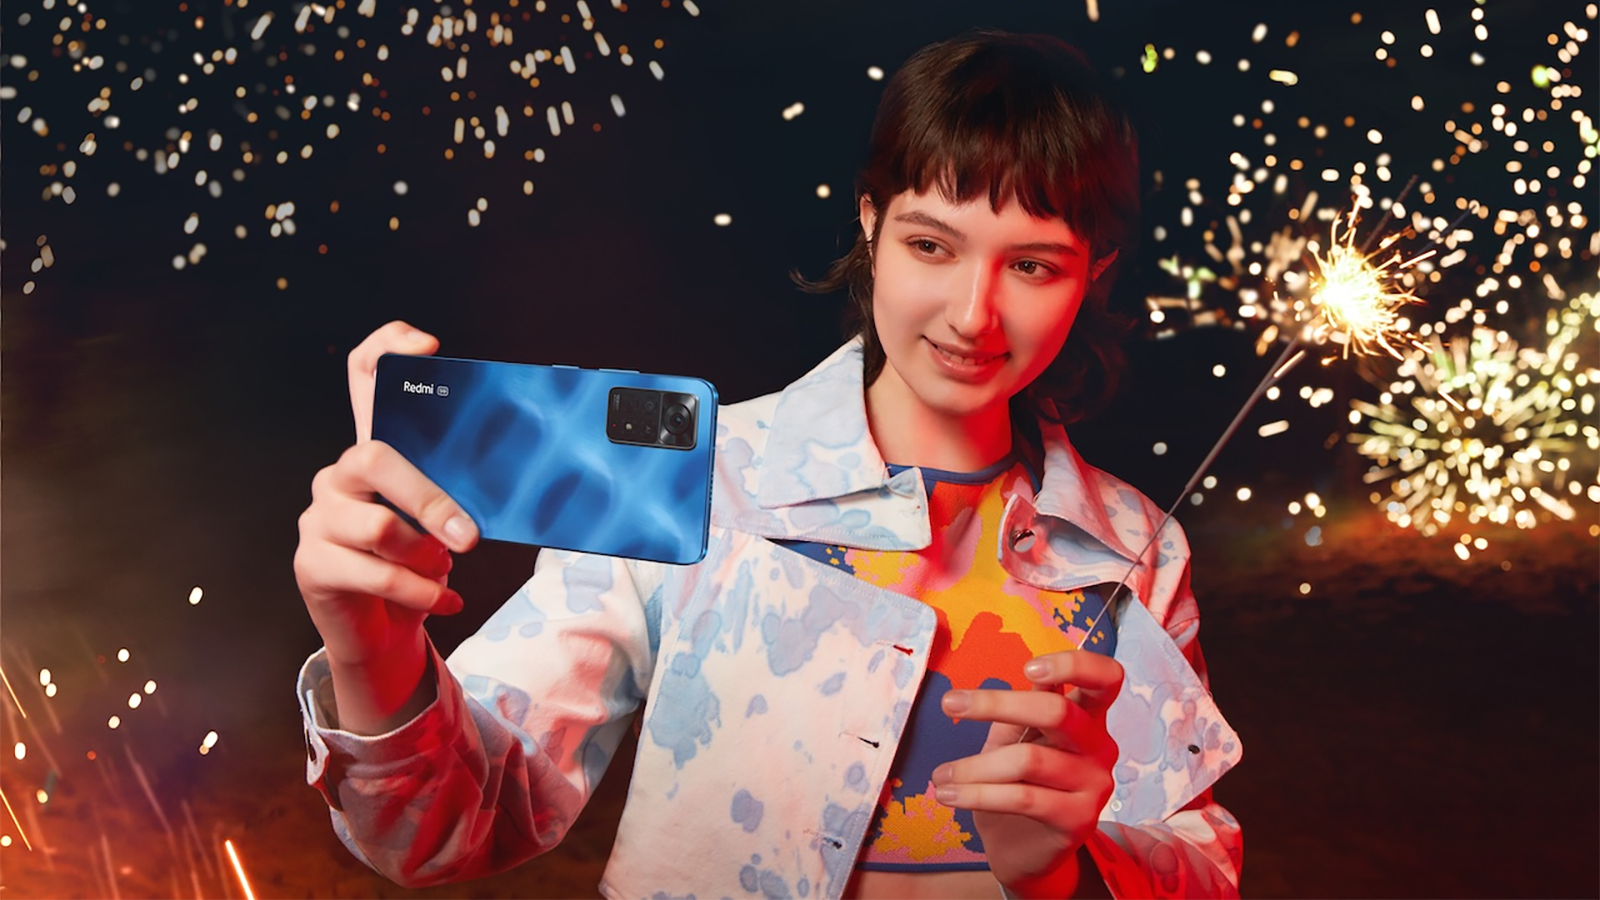 Smartphone - XIAOMI Redmi Note 12 Pro Plus 5G Charge rapide